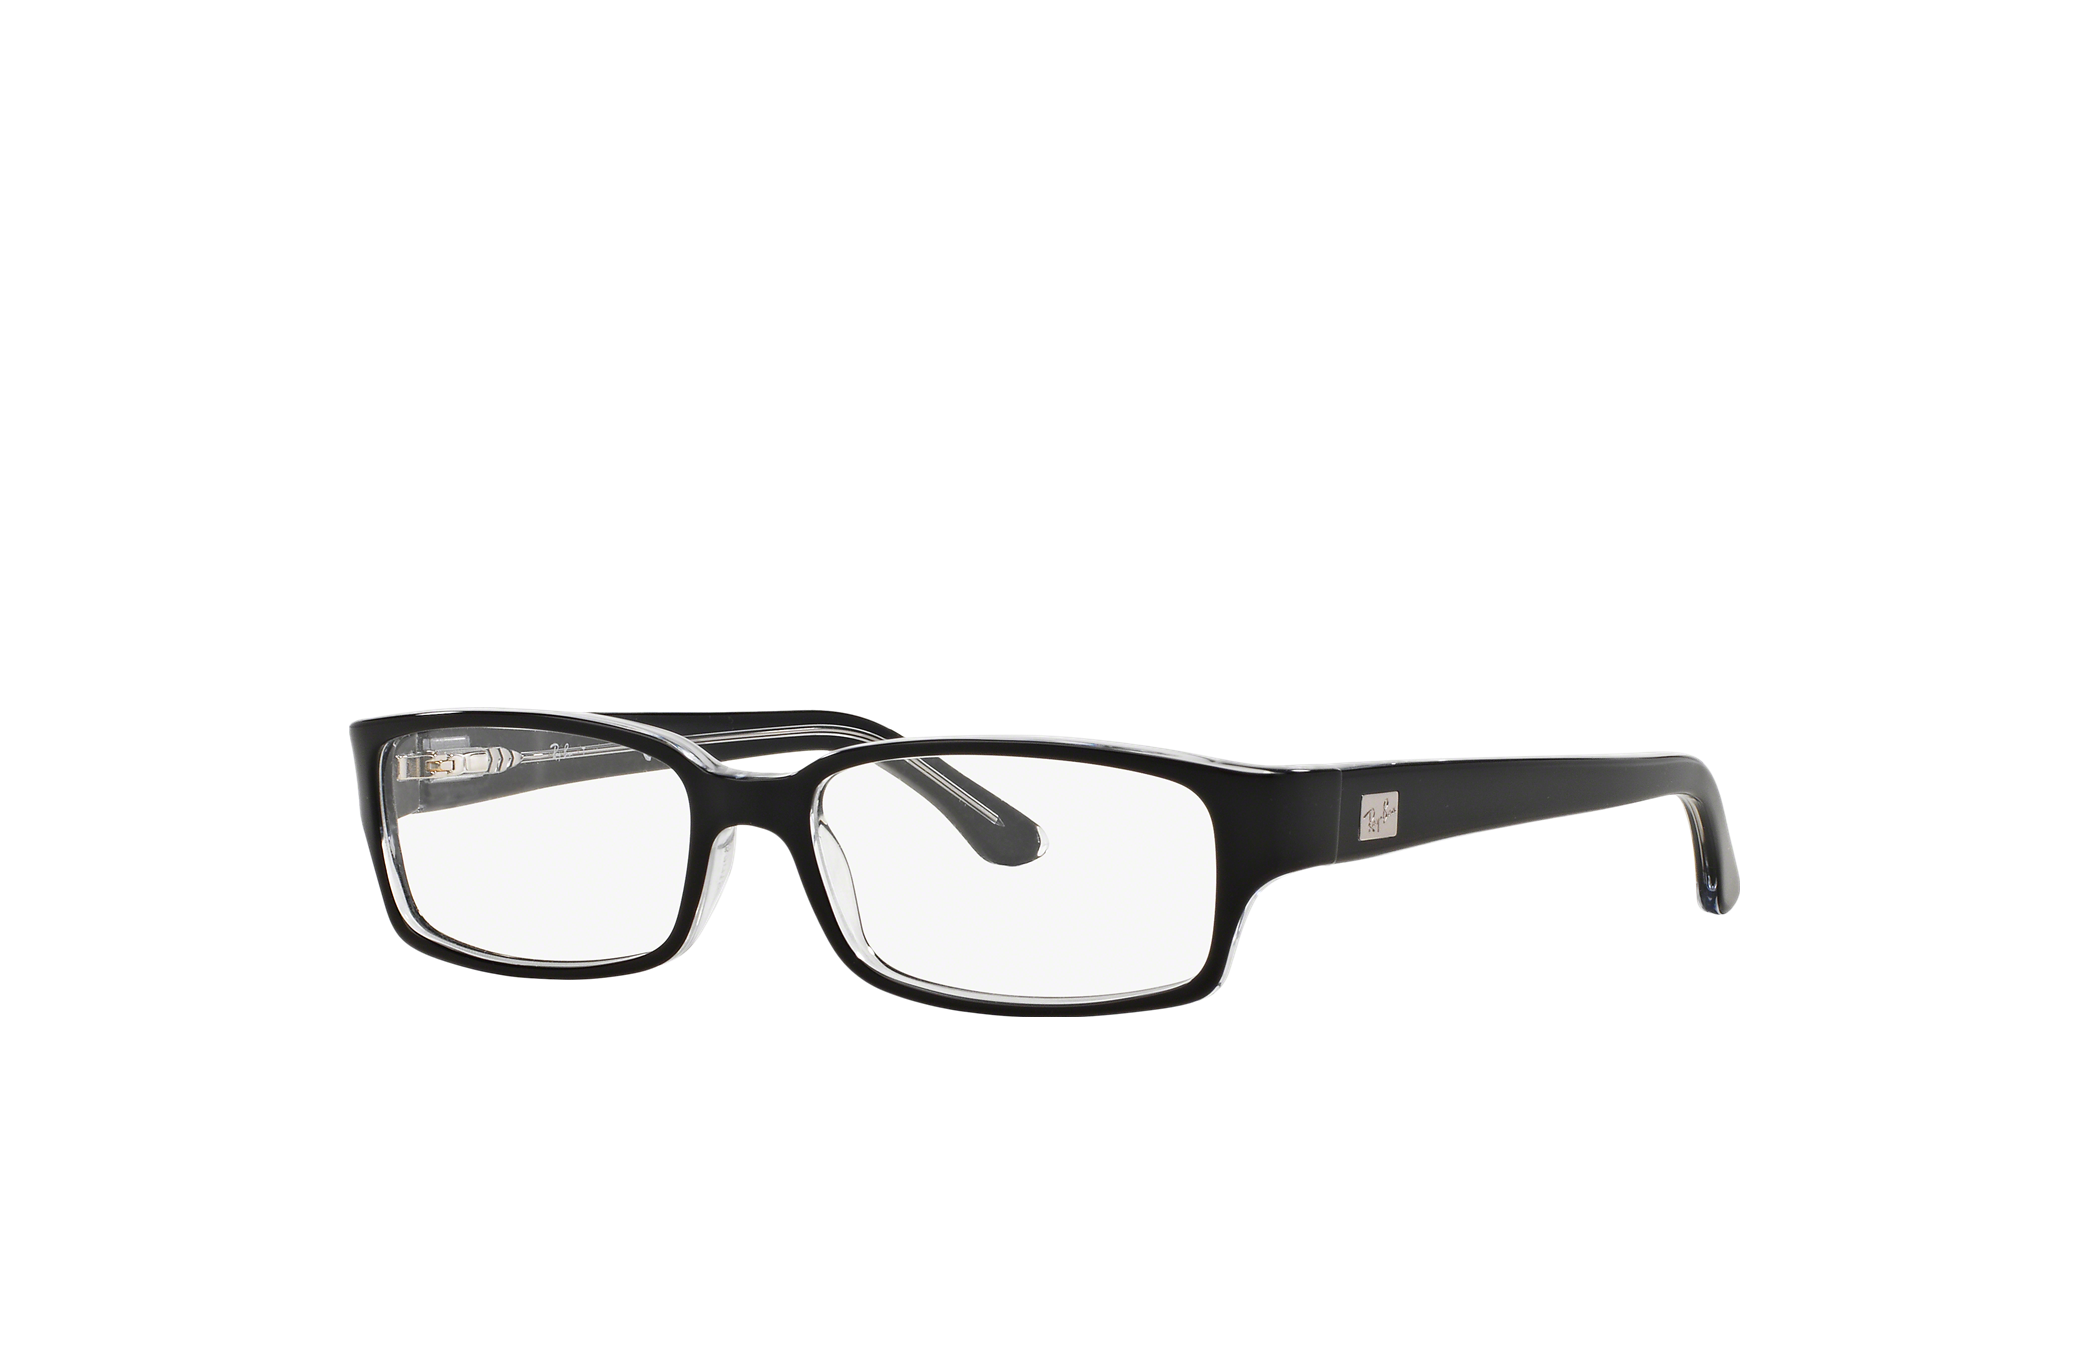 Rb5092 Eyeglasses with Black Frame | Ray-Ban®